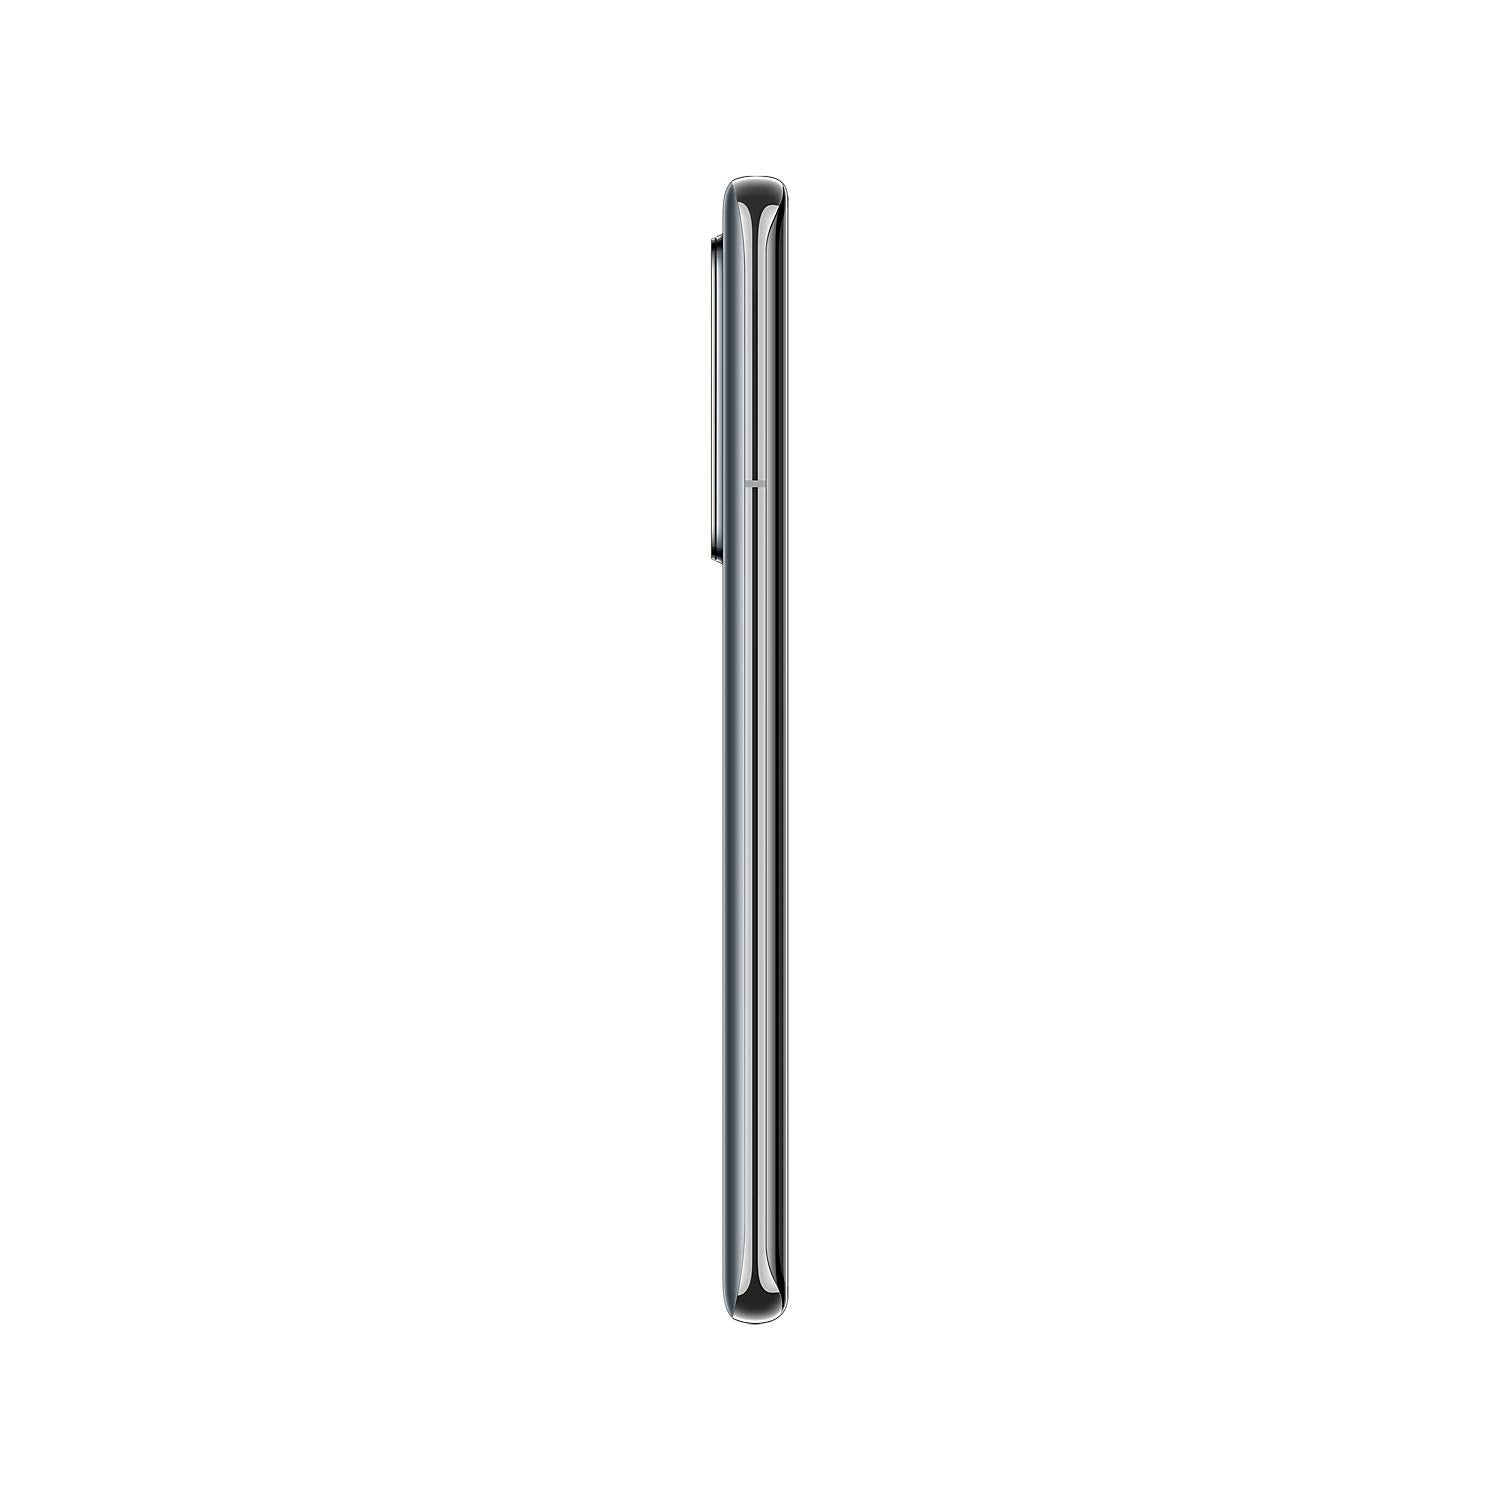 Huawei P40 Pro - Smartphone 256GB, 8GB RAM, Dual Sim, Silver Frost - informati